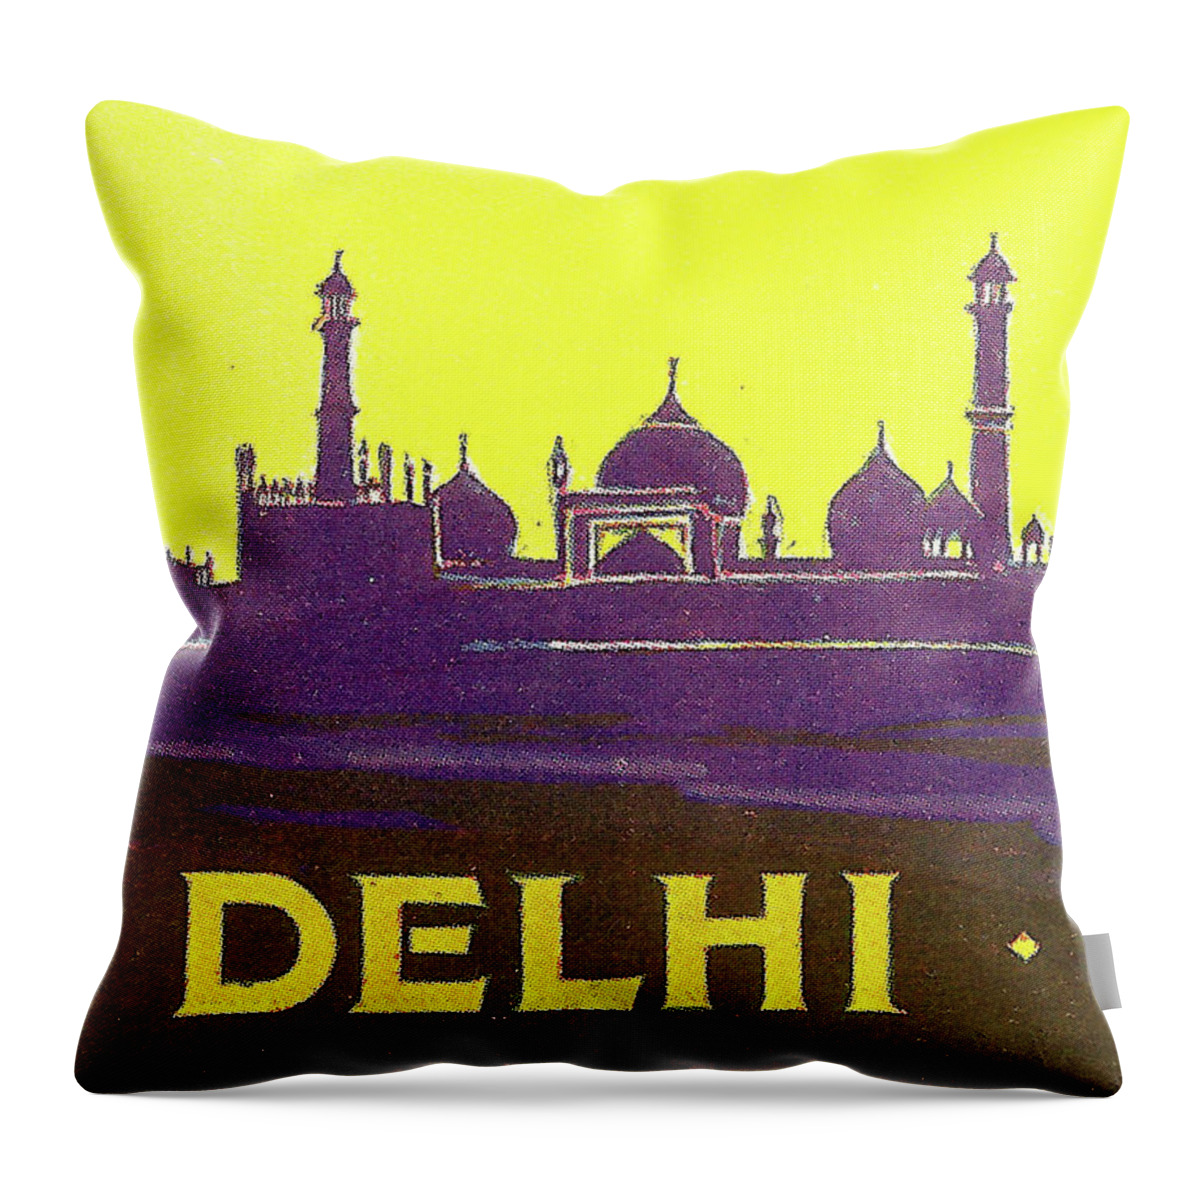 Delhi Throw Pillow featuring the digital art Delhi, India by Long Shot